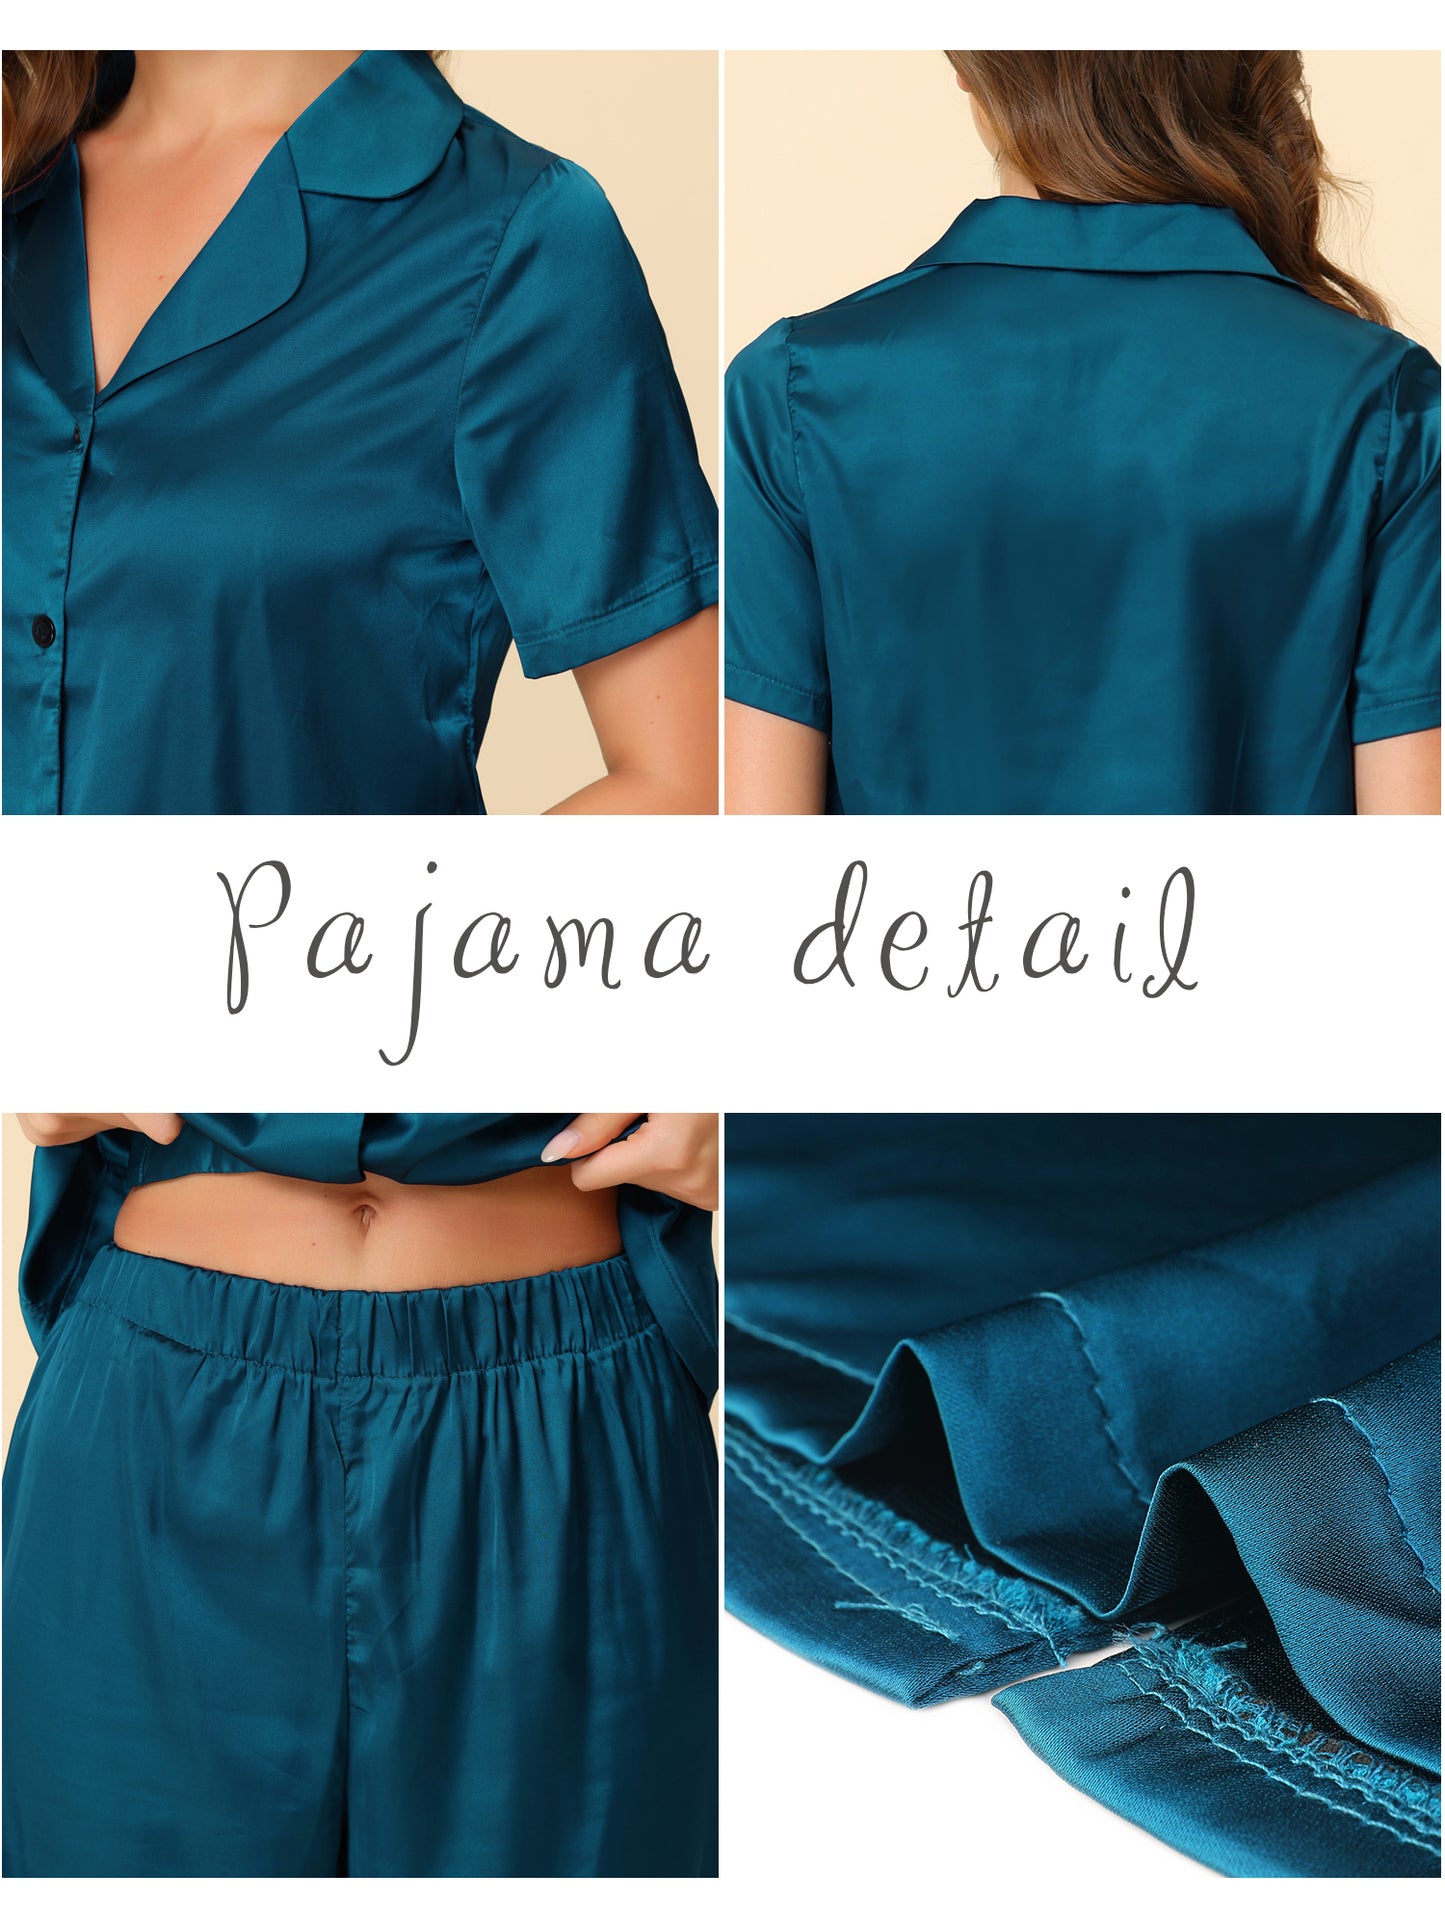 cheibear Pajama Loungewear Tops and Capri Pants Satin Sets Peacock Blue